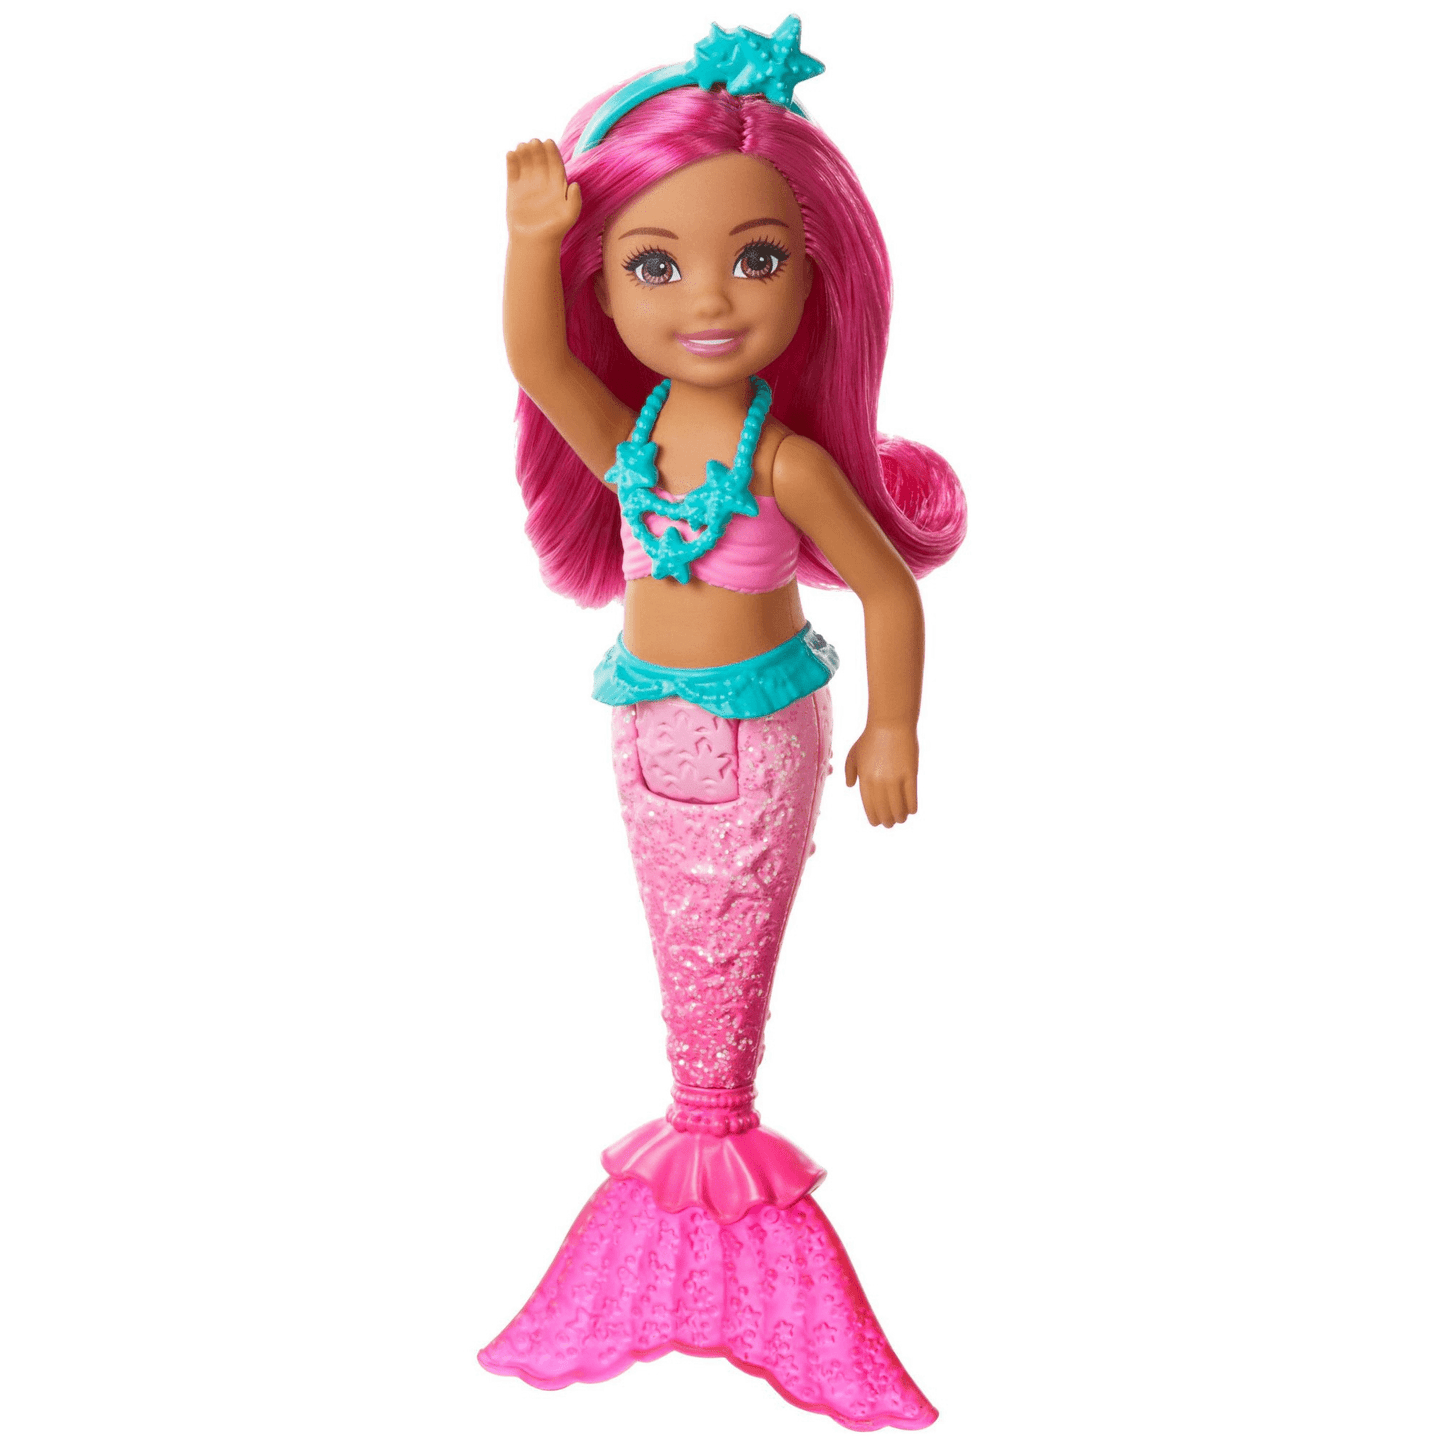 Barbie Chelsea Dreamtopia Dolls Assortment Styles, 6.5-inch - Pick Your Favorite Chelsea Barbie (1 Count)